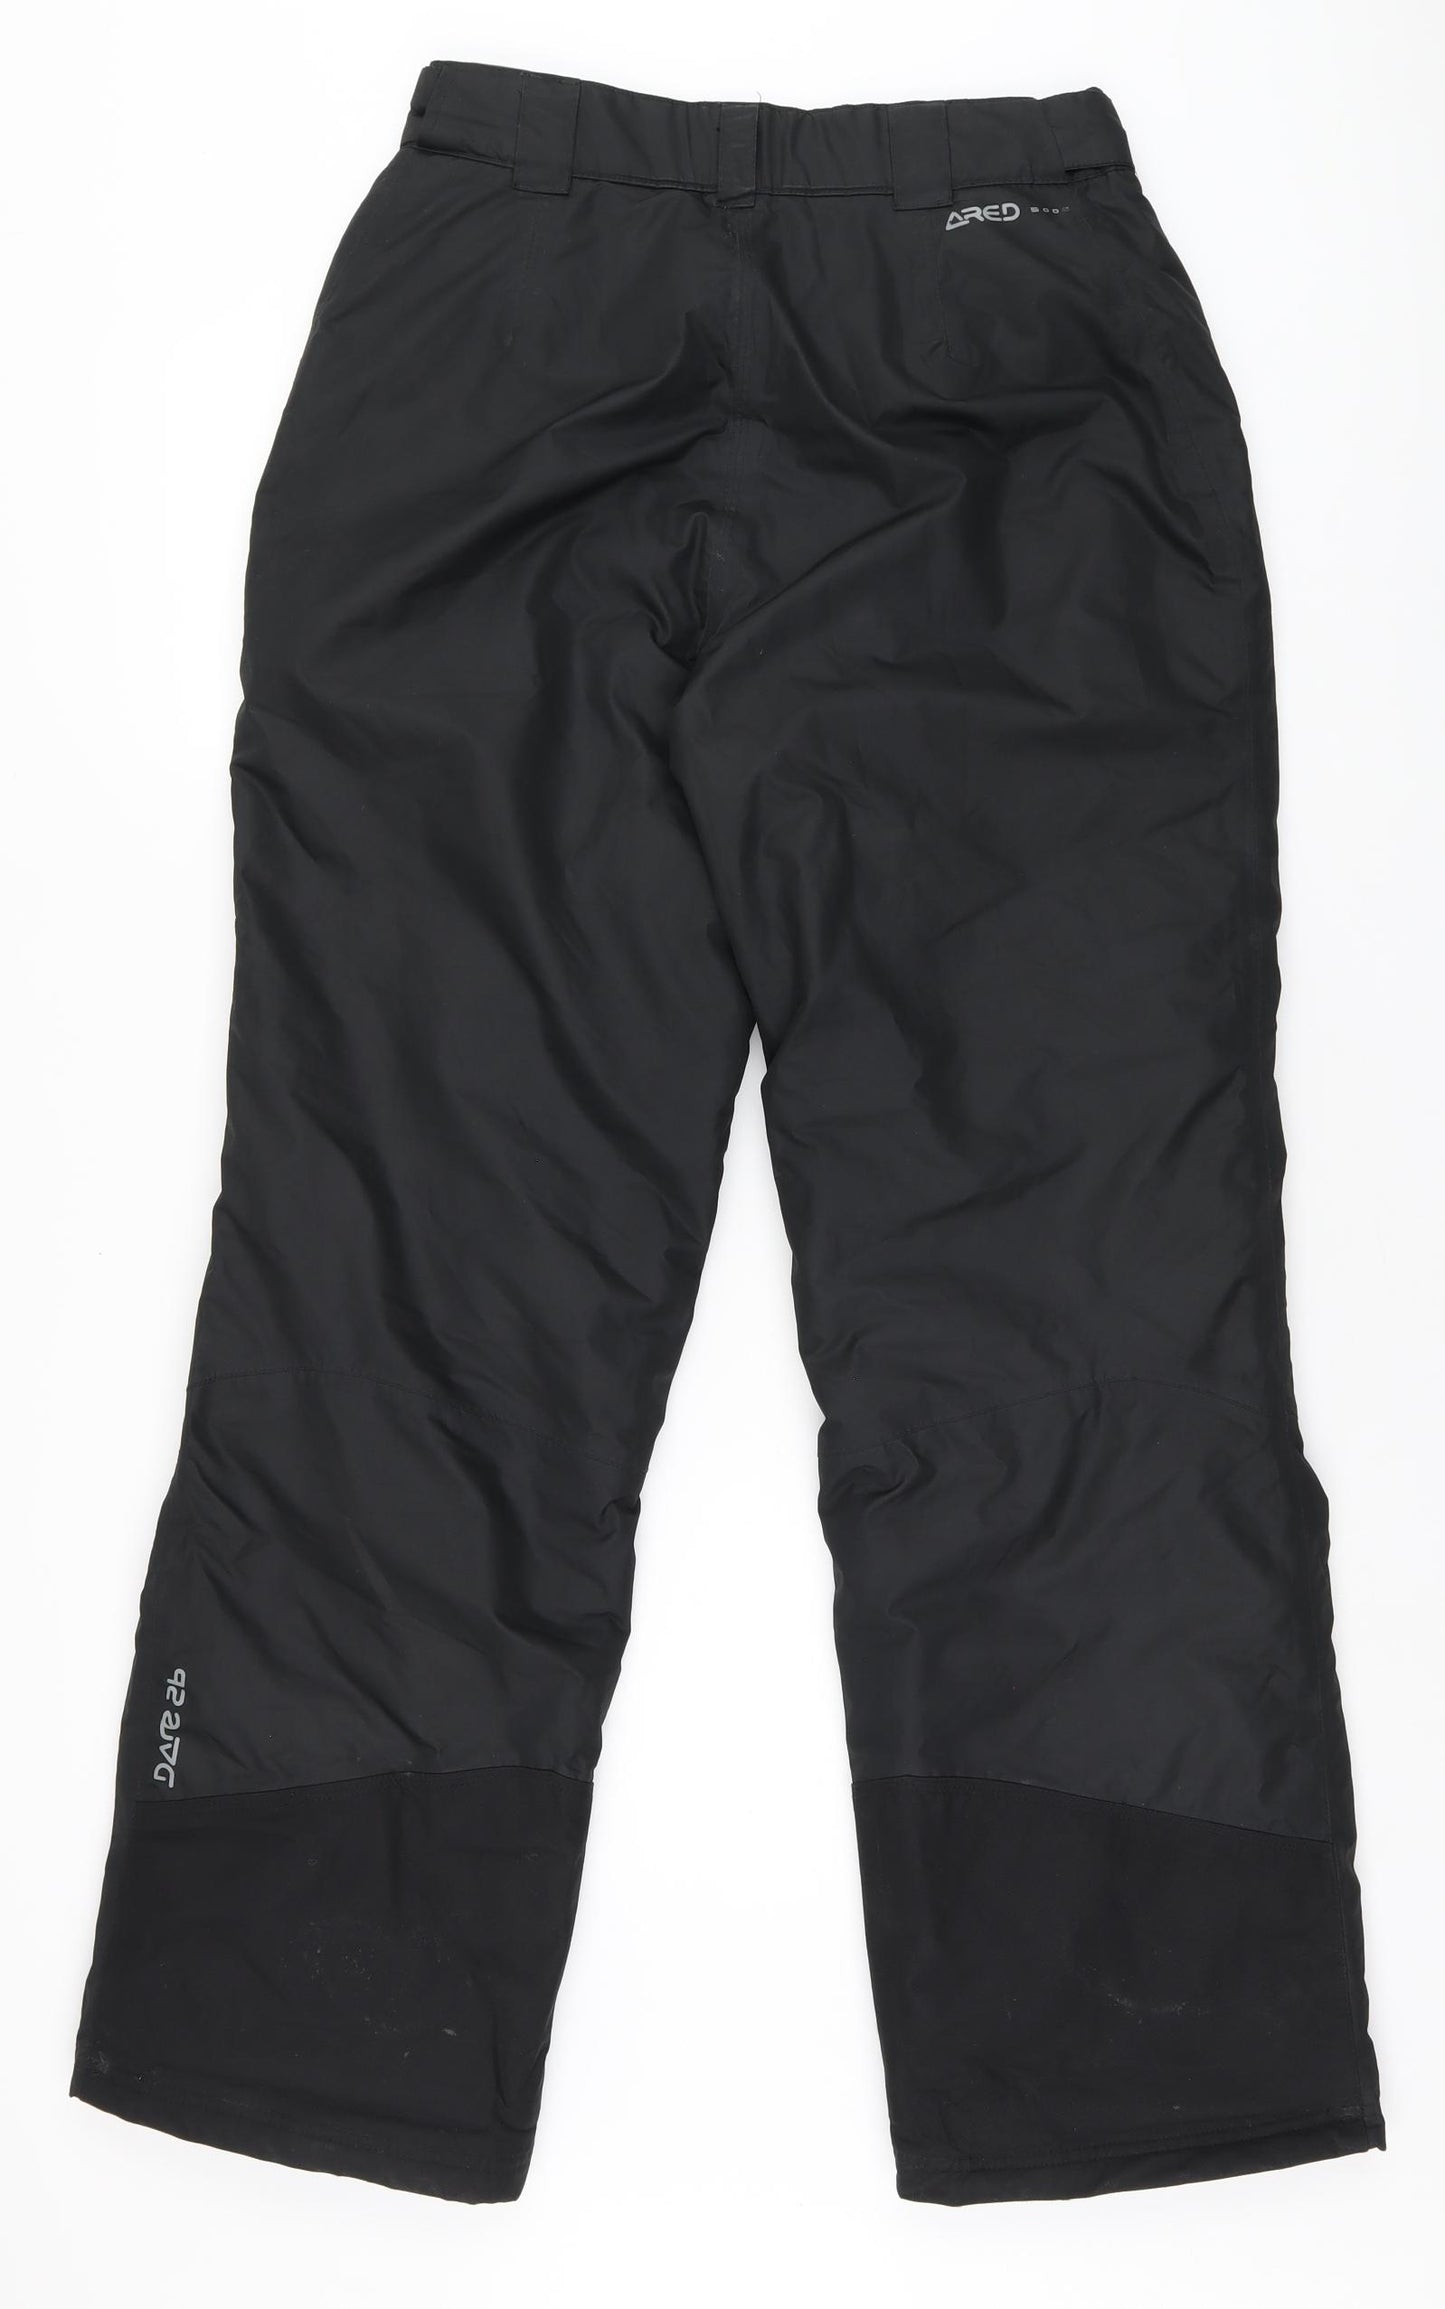 Dare 2B Womens Black Polyester Snow Pants Trousers Size 10 L30.5 in Regular Zip - Ski Salopettes